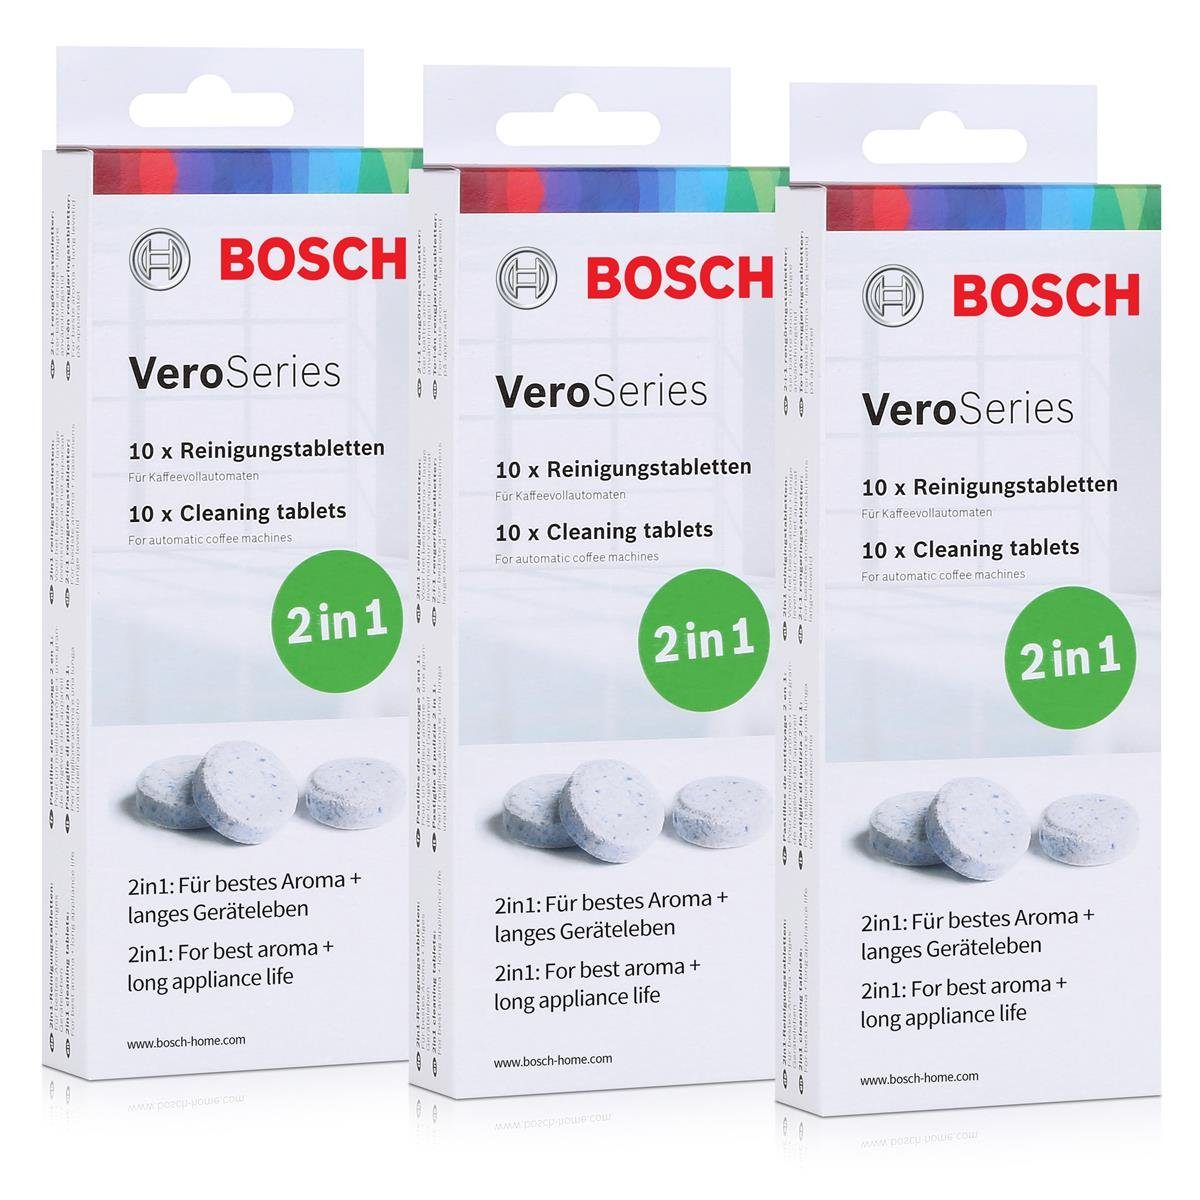 BOSCH Bosch VeroSeries TCZ8001 Reinigungstabletten 2in1 - 10 Tabletten (3er Reinigungstabletten | Putzmittel